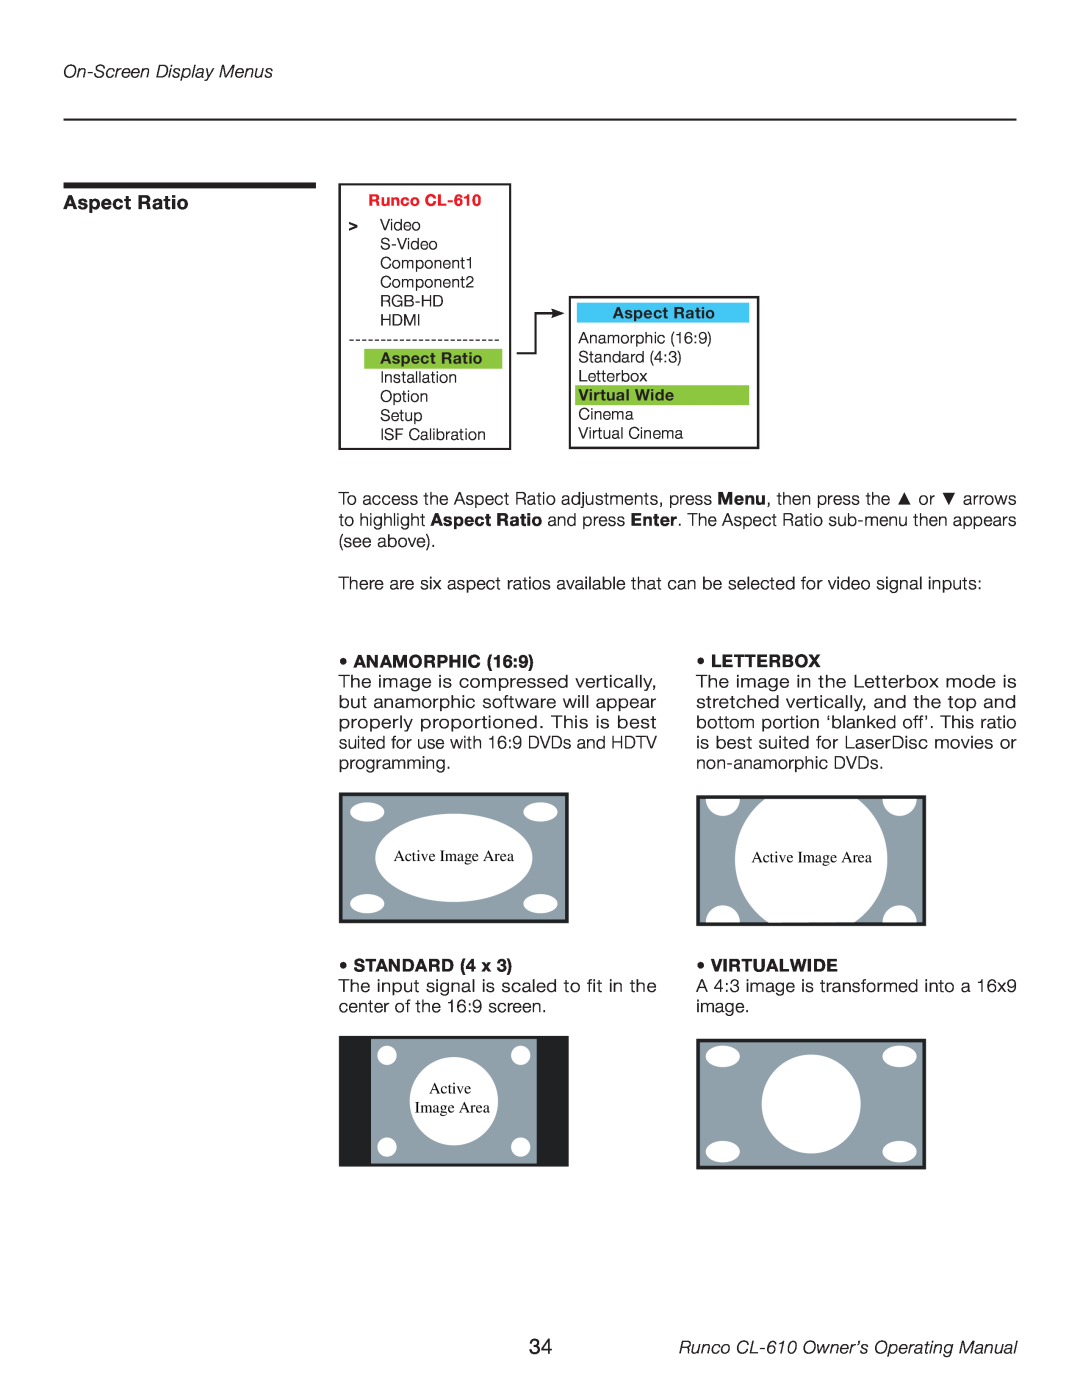 Runco CL-610LT manual Aspect Ratio, On-Screen Display Menus, Anamorphic, Letterbox, STANDARD 4 x, Virtualwide 